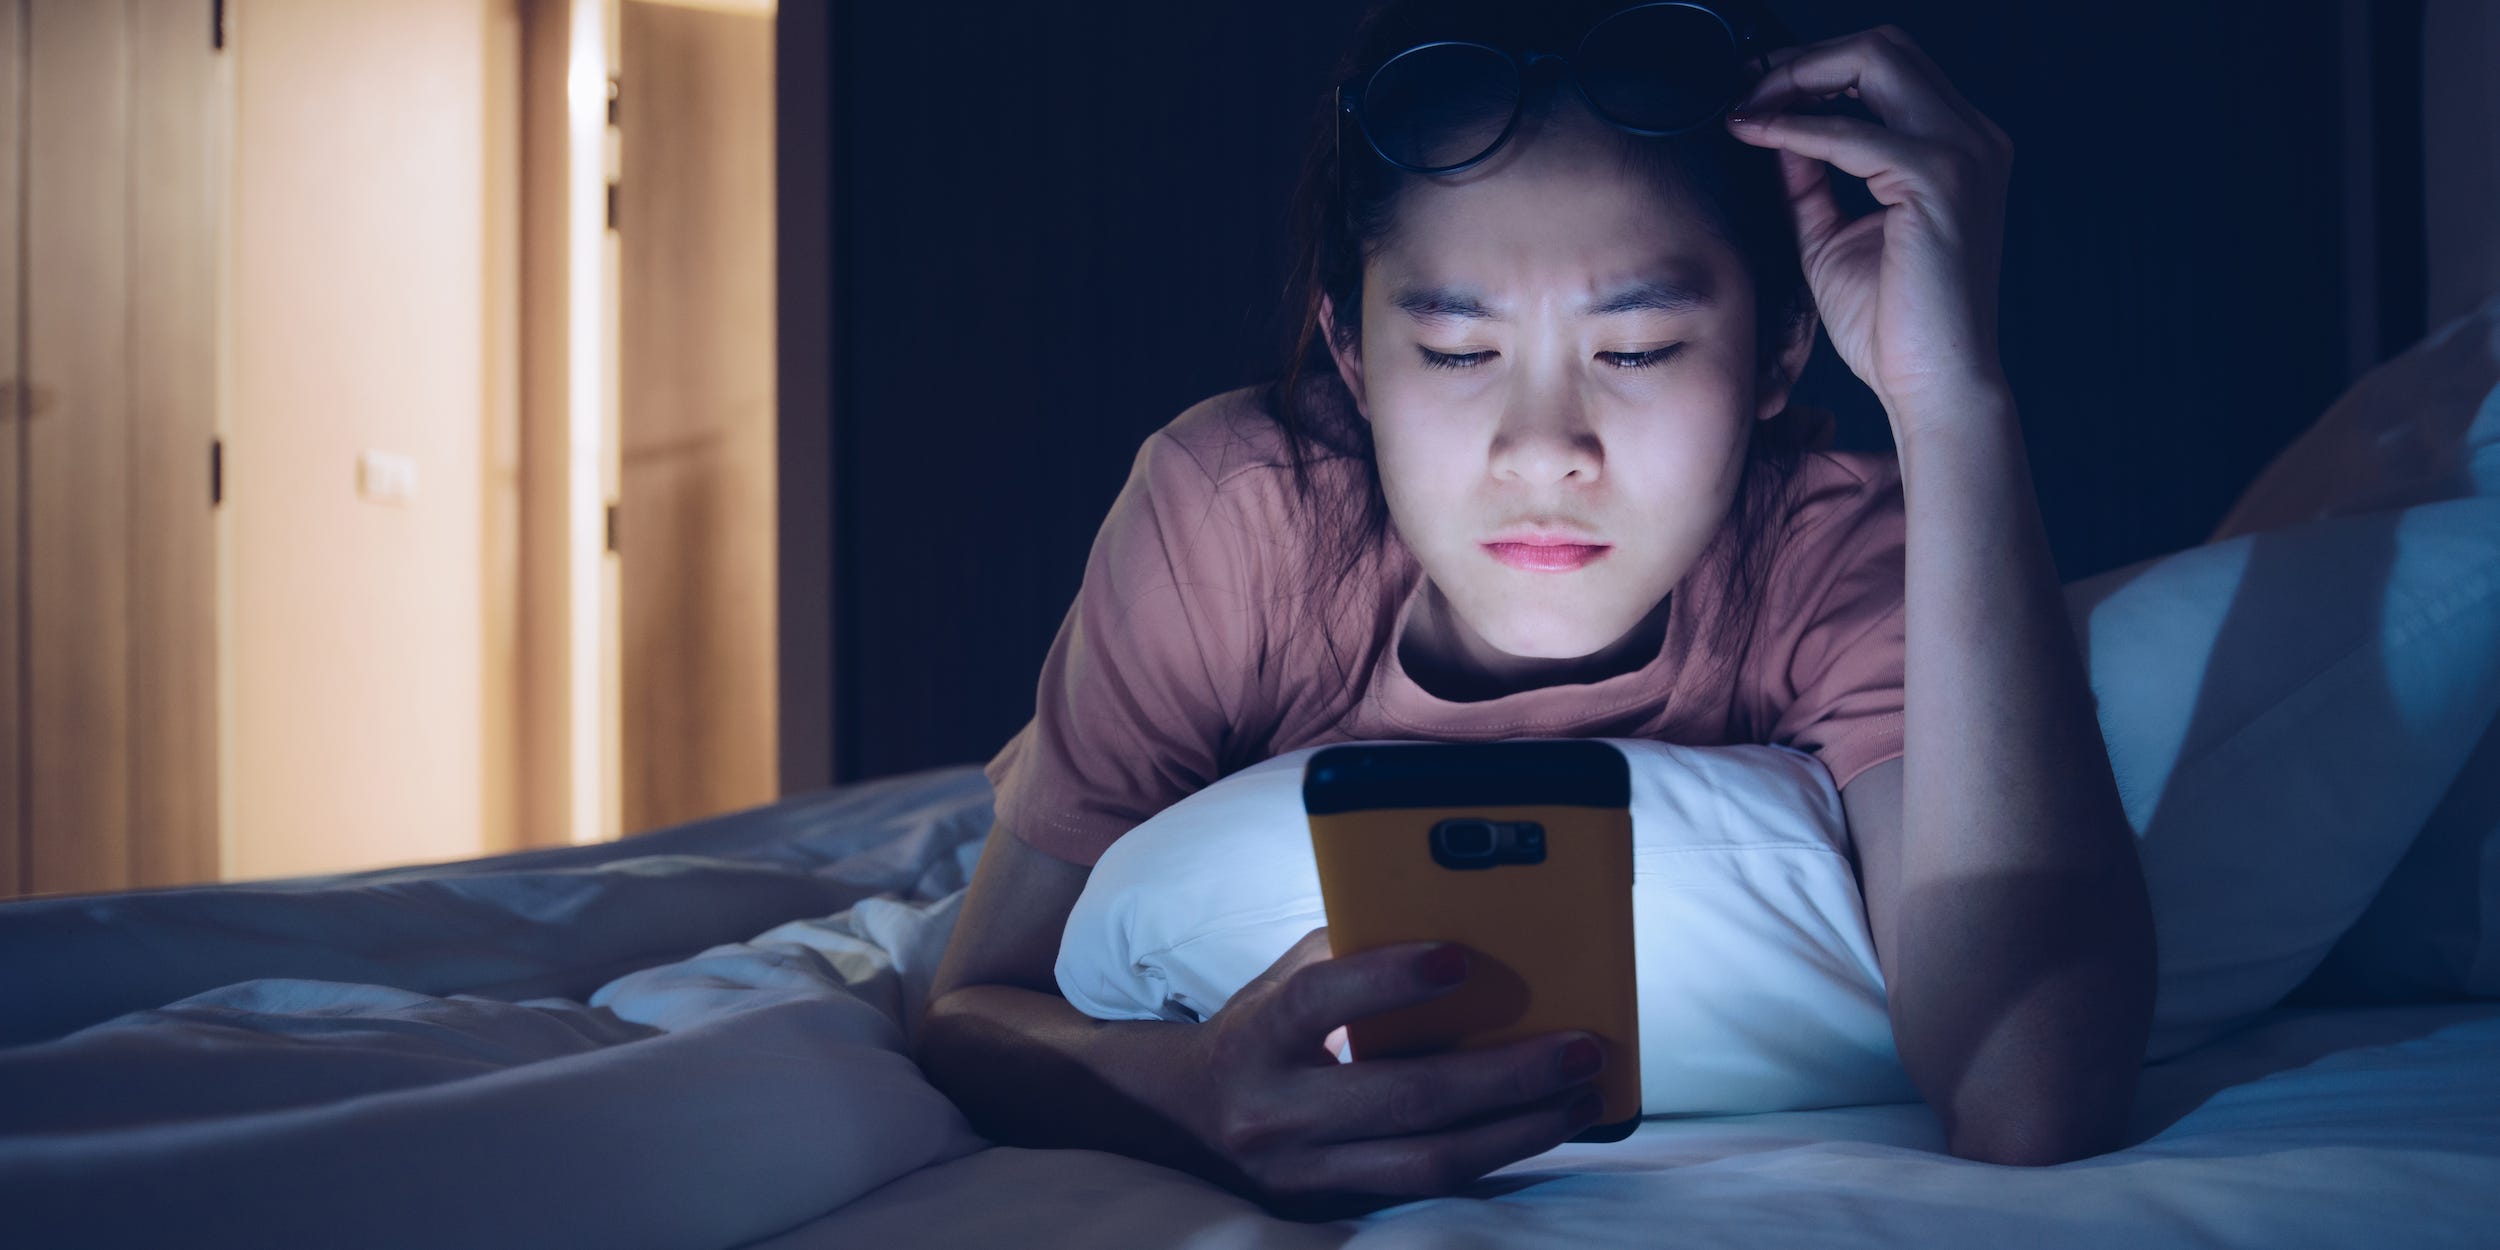 Teen using smartphone in bed at night dark